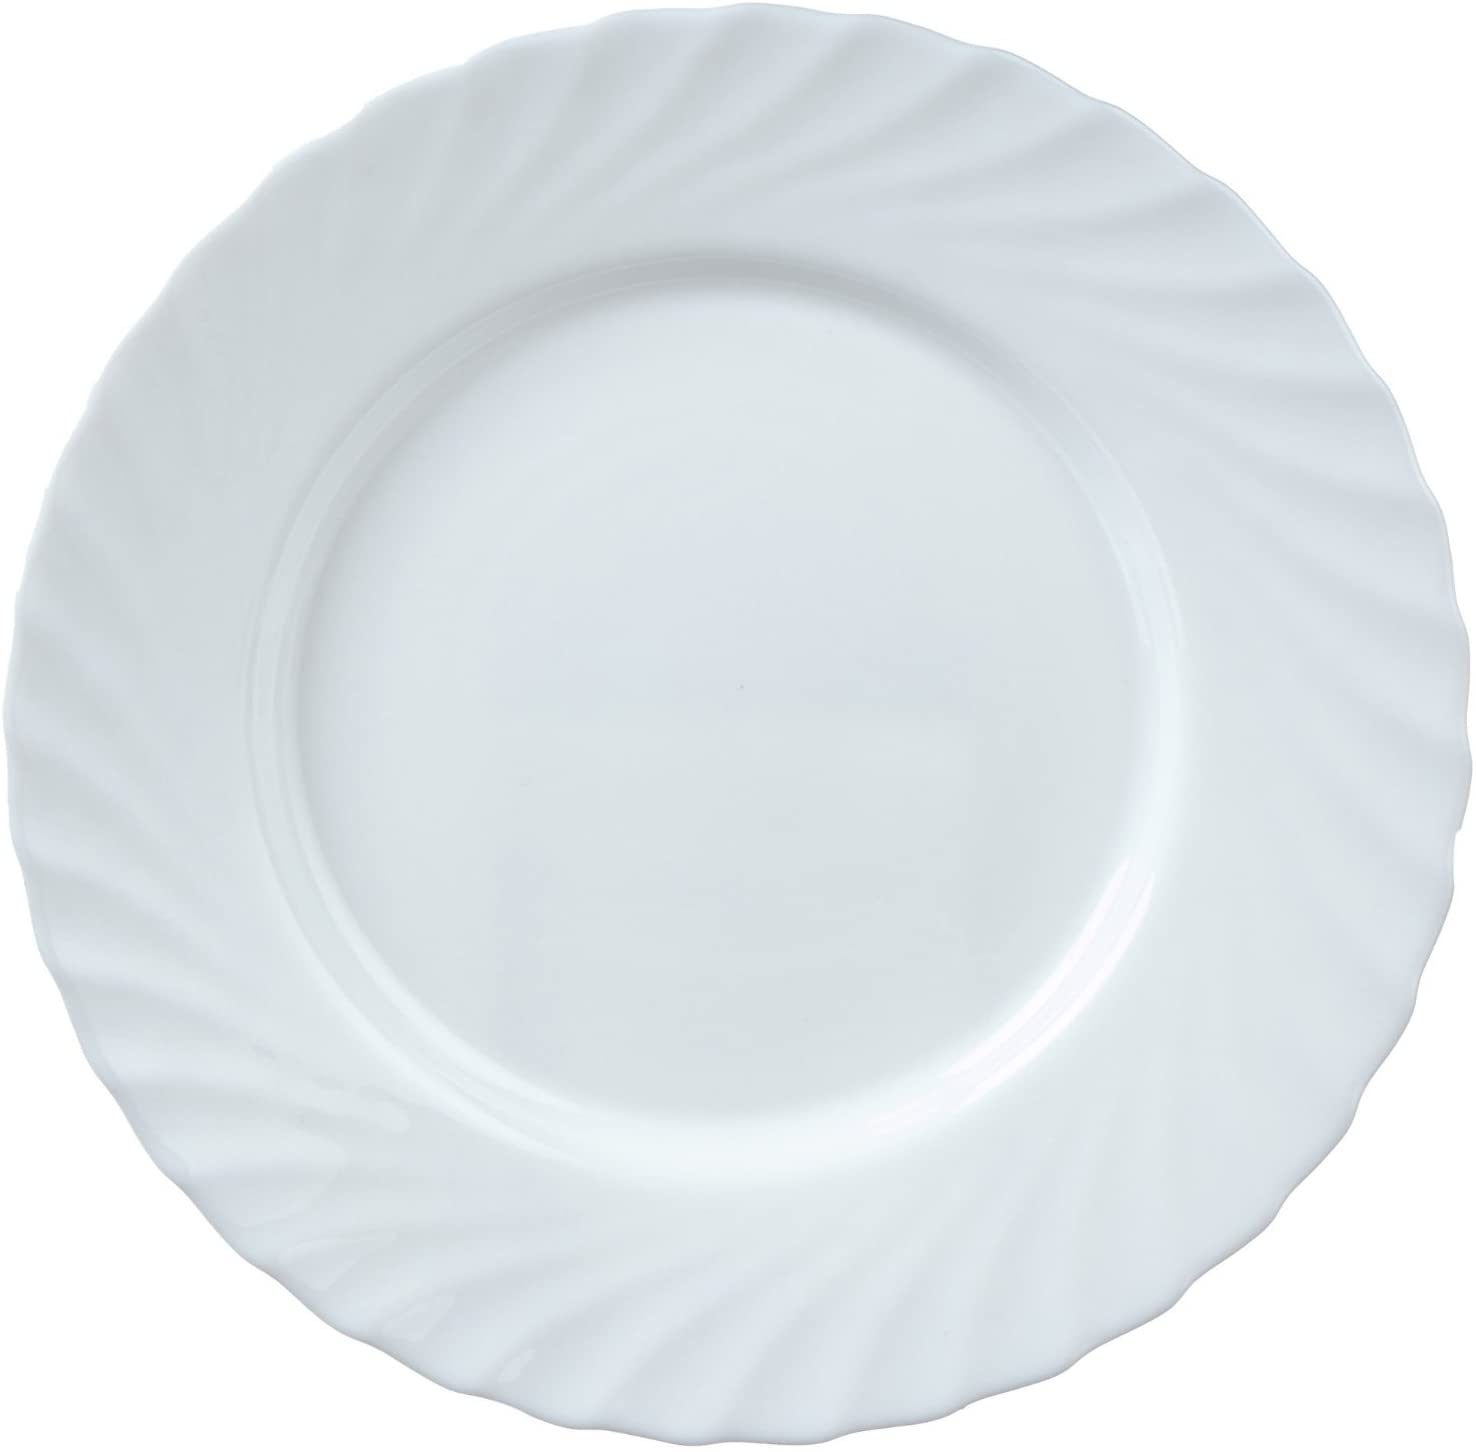 Arcoroc Trianon Dinner Range Plates and Tray, 6 Teller flach 27,3cm